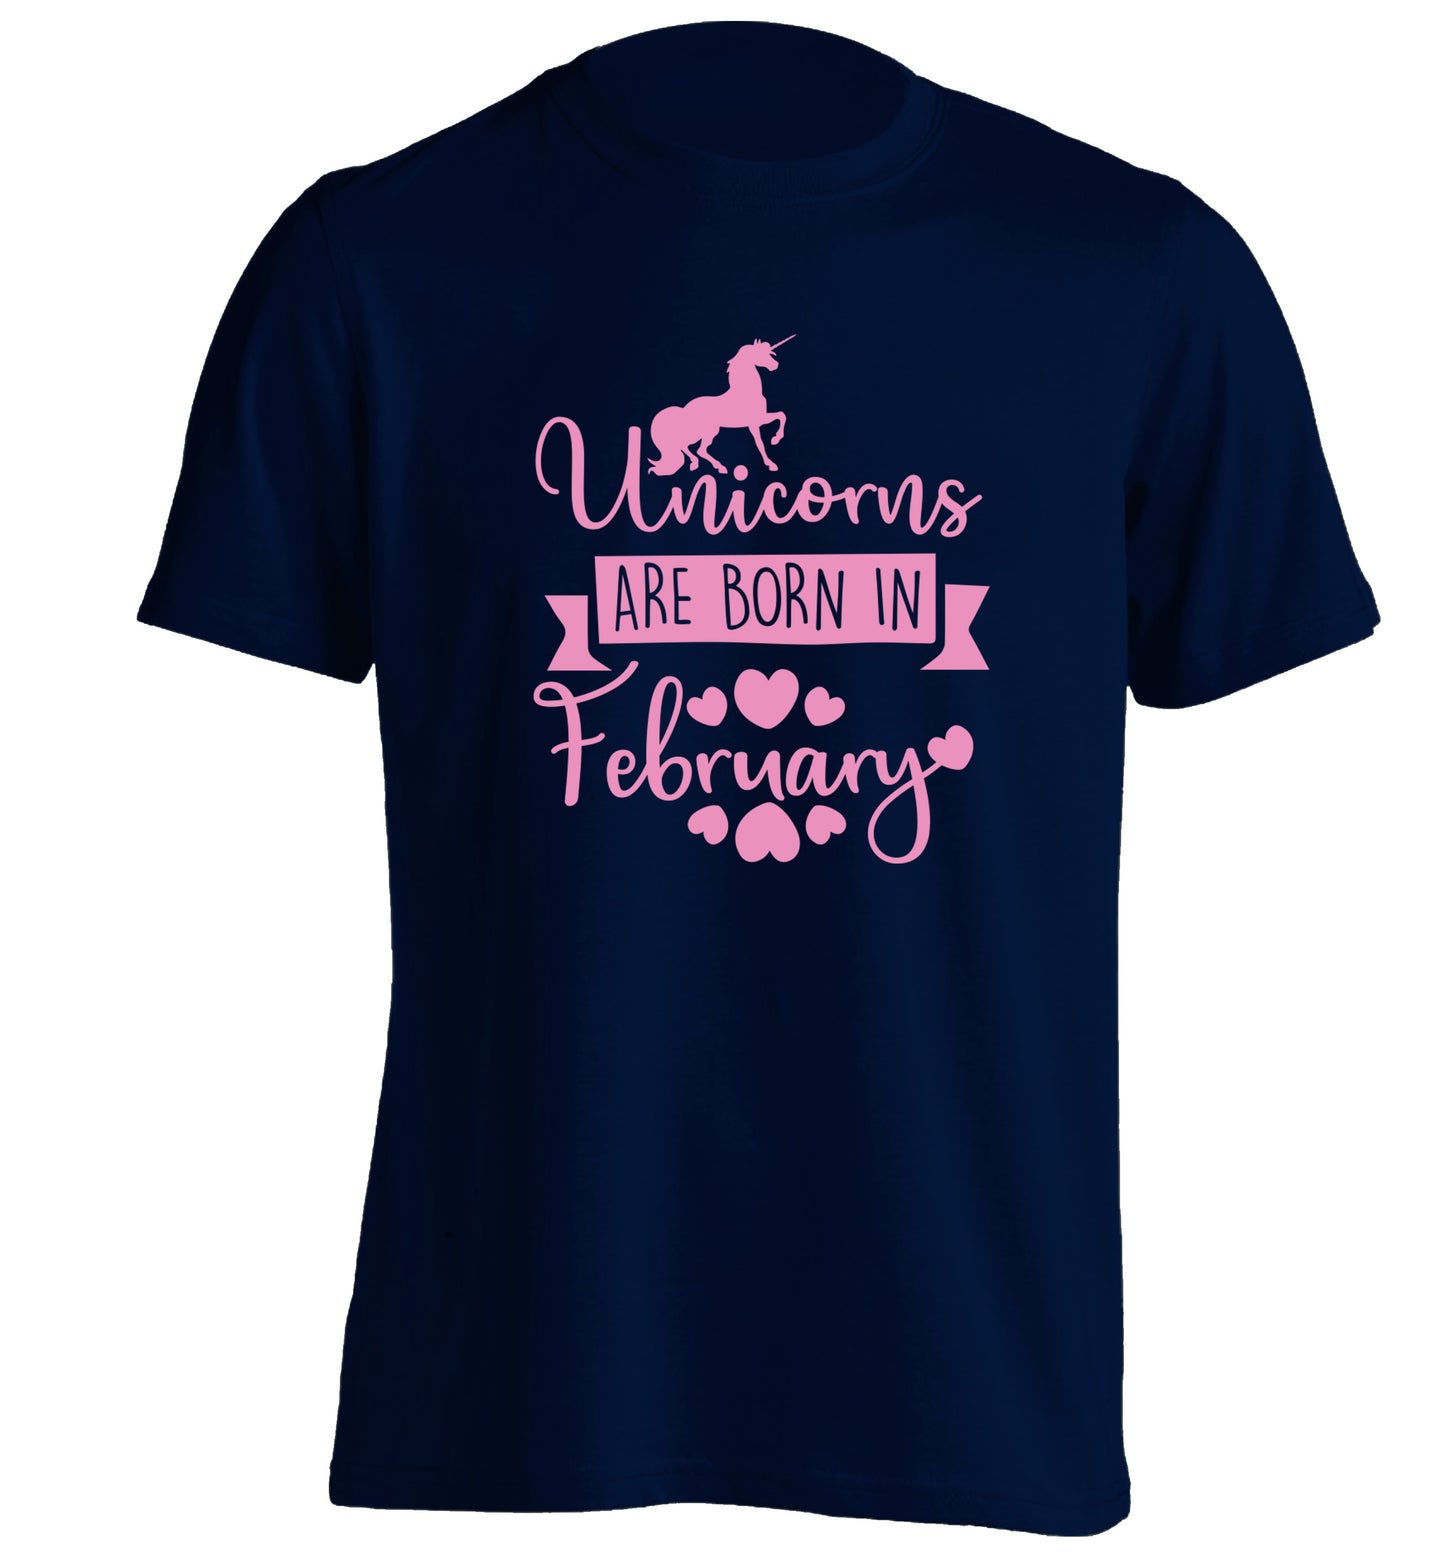 Unicorns are born in February adults unisex navy Tshirt 2XL